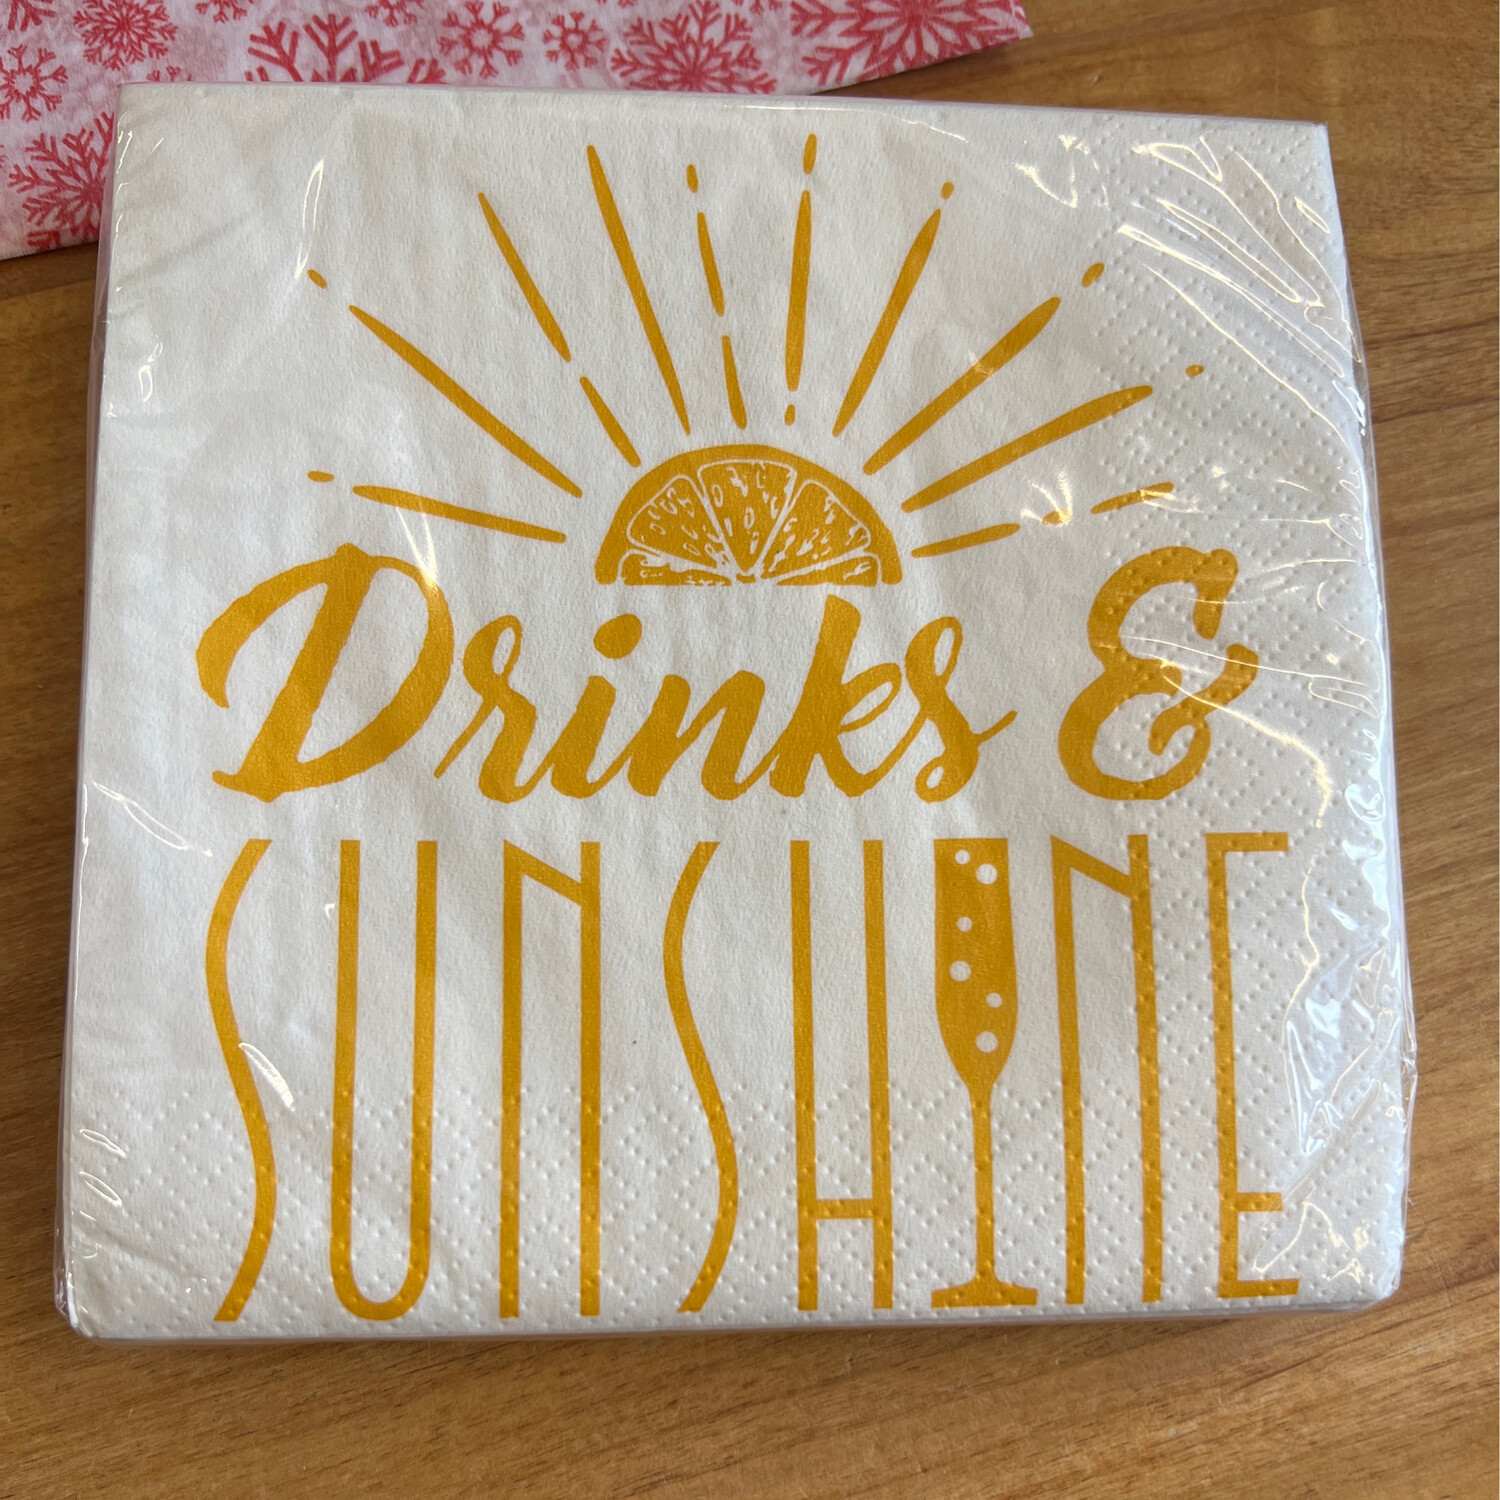 Drinks & Sunshine Cocktail